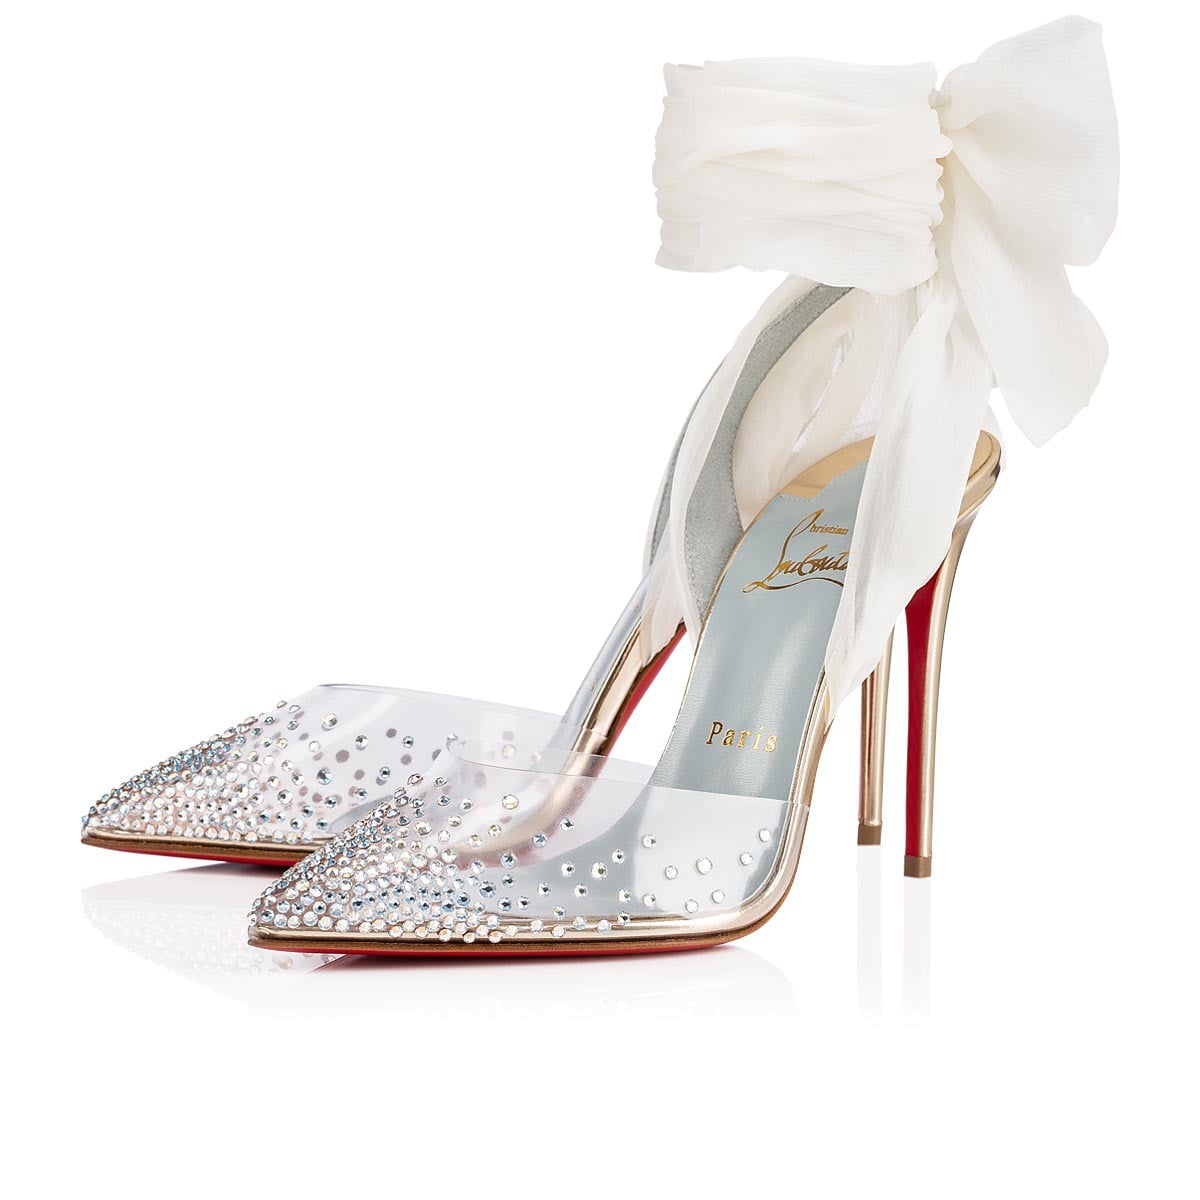 louboutin sparkly heels